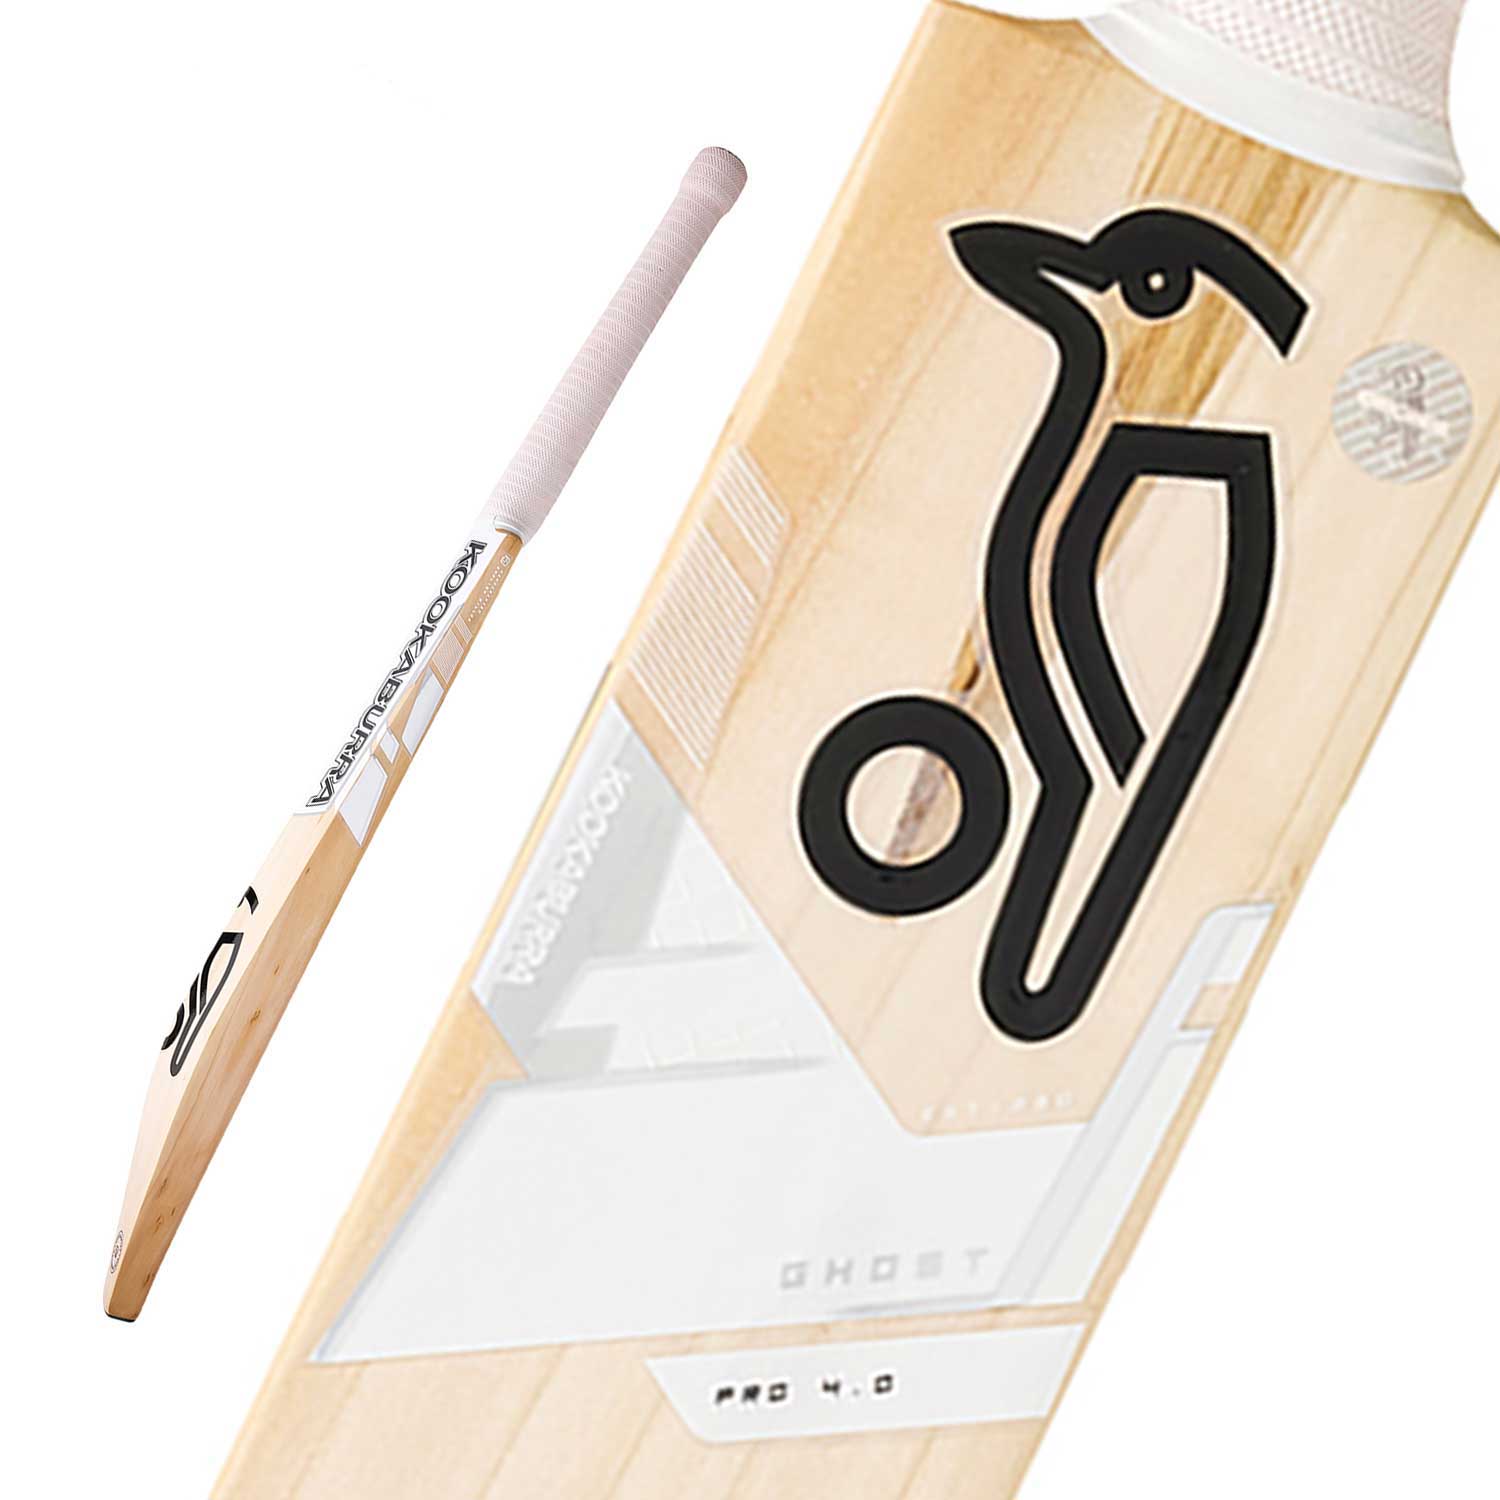 Kookaburra Ghost Pro 4.0 Senior Cricket Bat